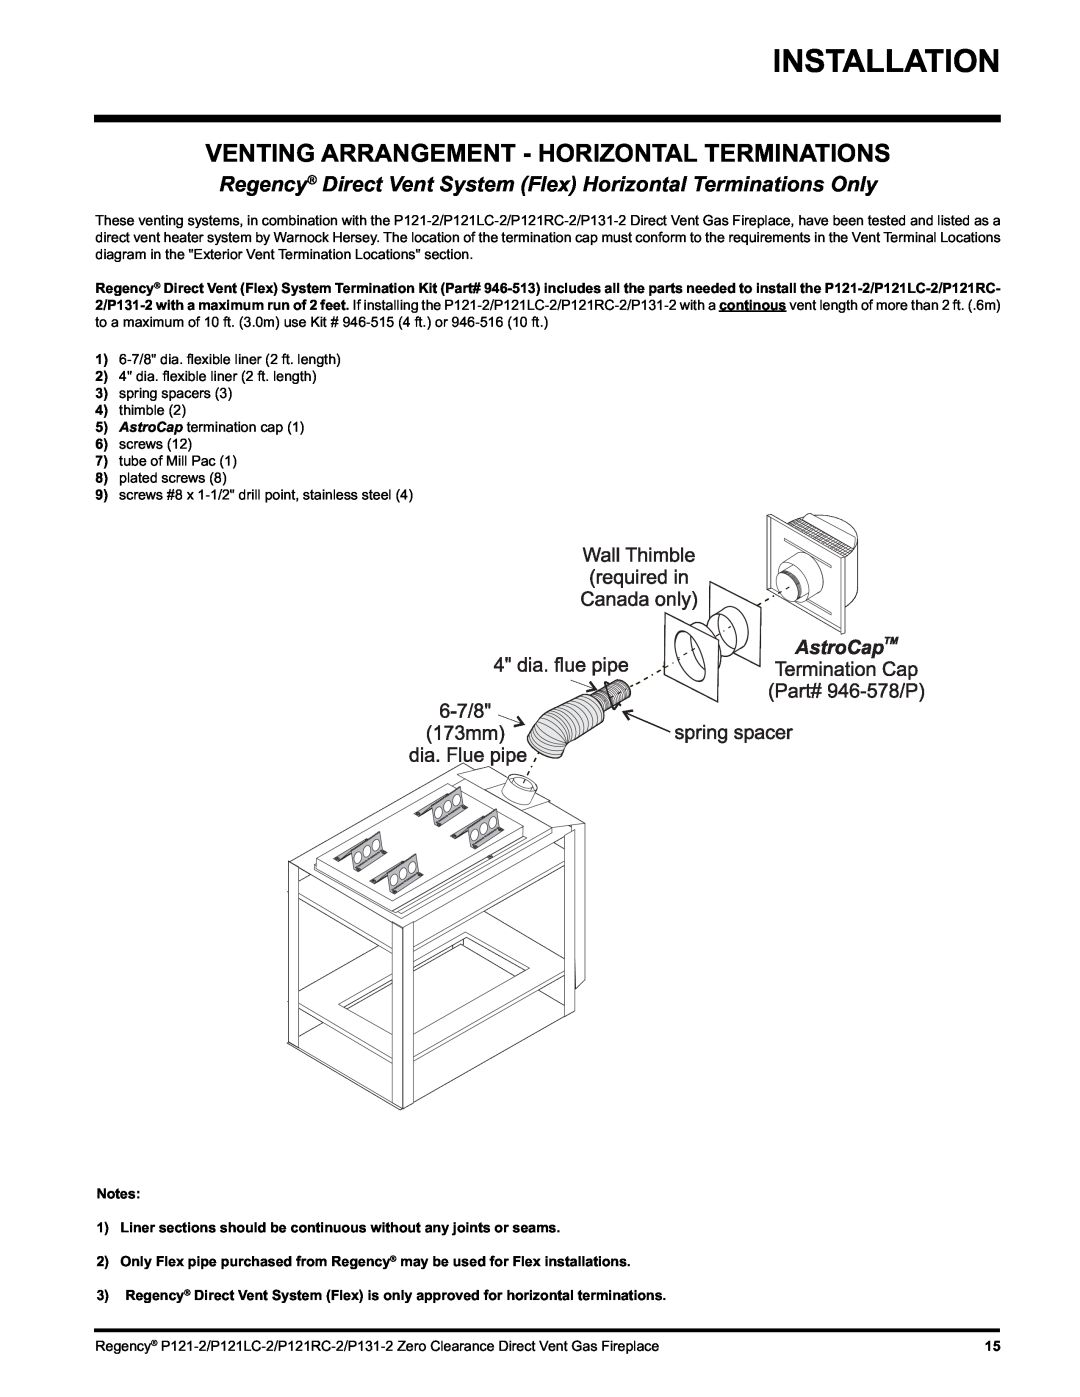 Regency P131, P121RC, P121LC installation manual Venting Arrangement - Horizontal Terminations 